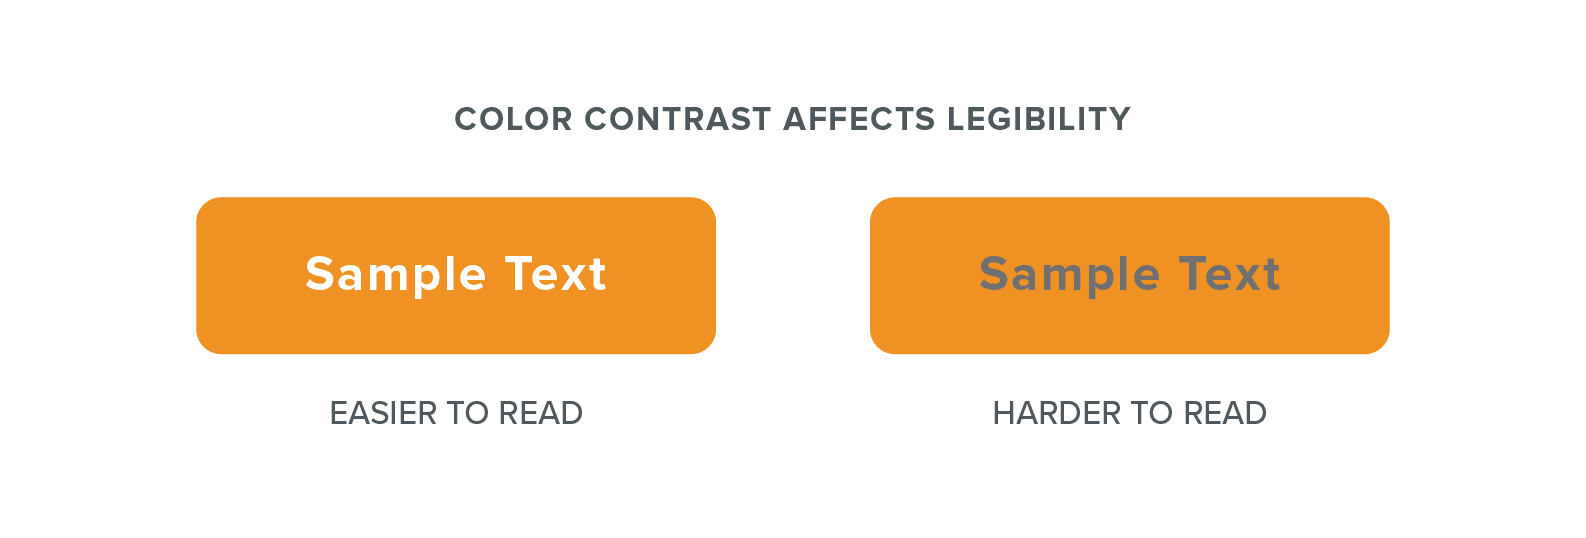 color contrast affects legibility